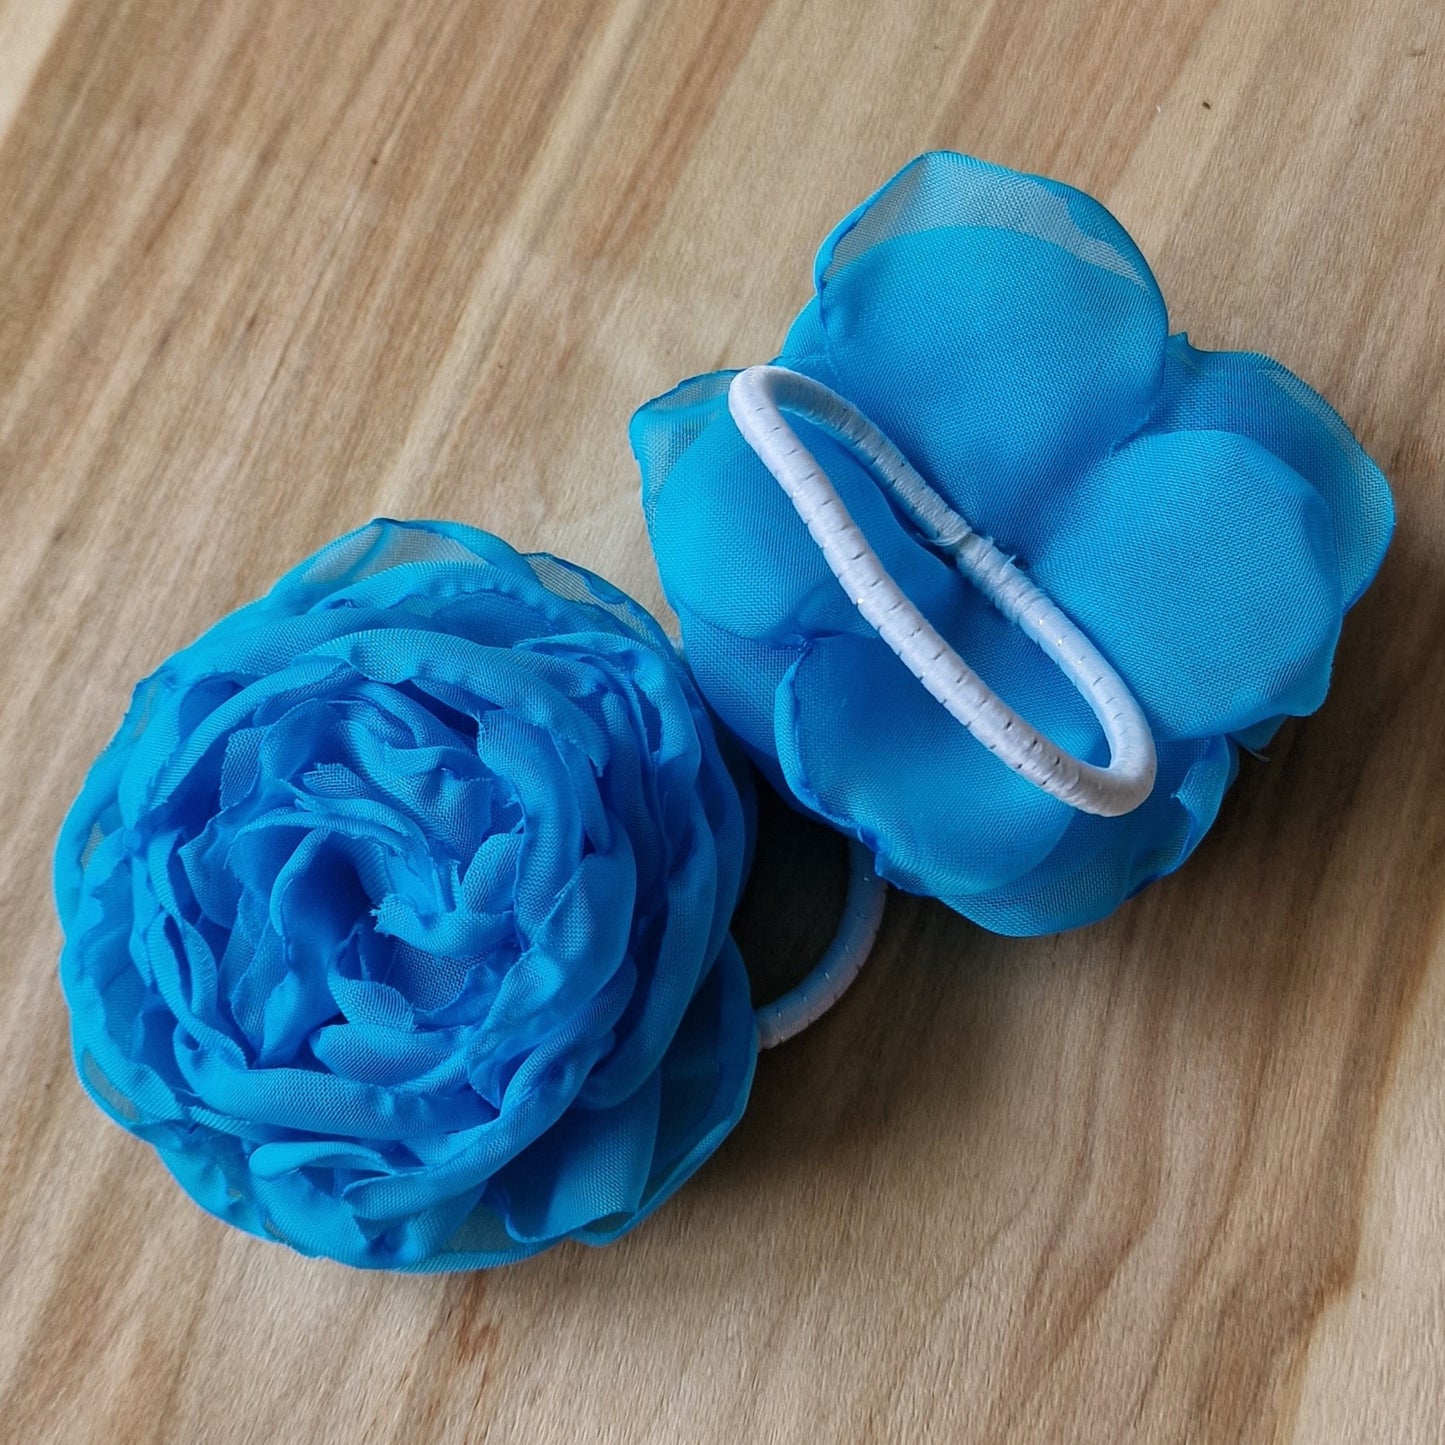 Hair elastic with blue flower (OLKH 6)